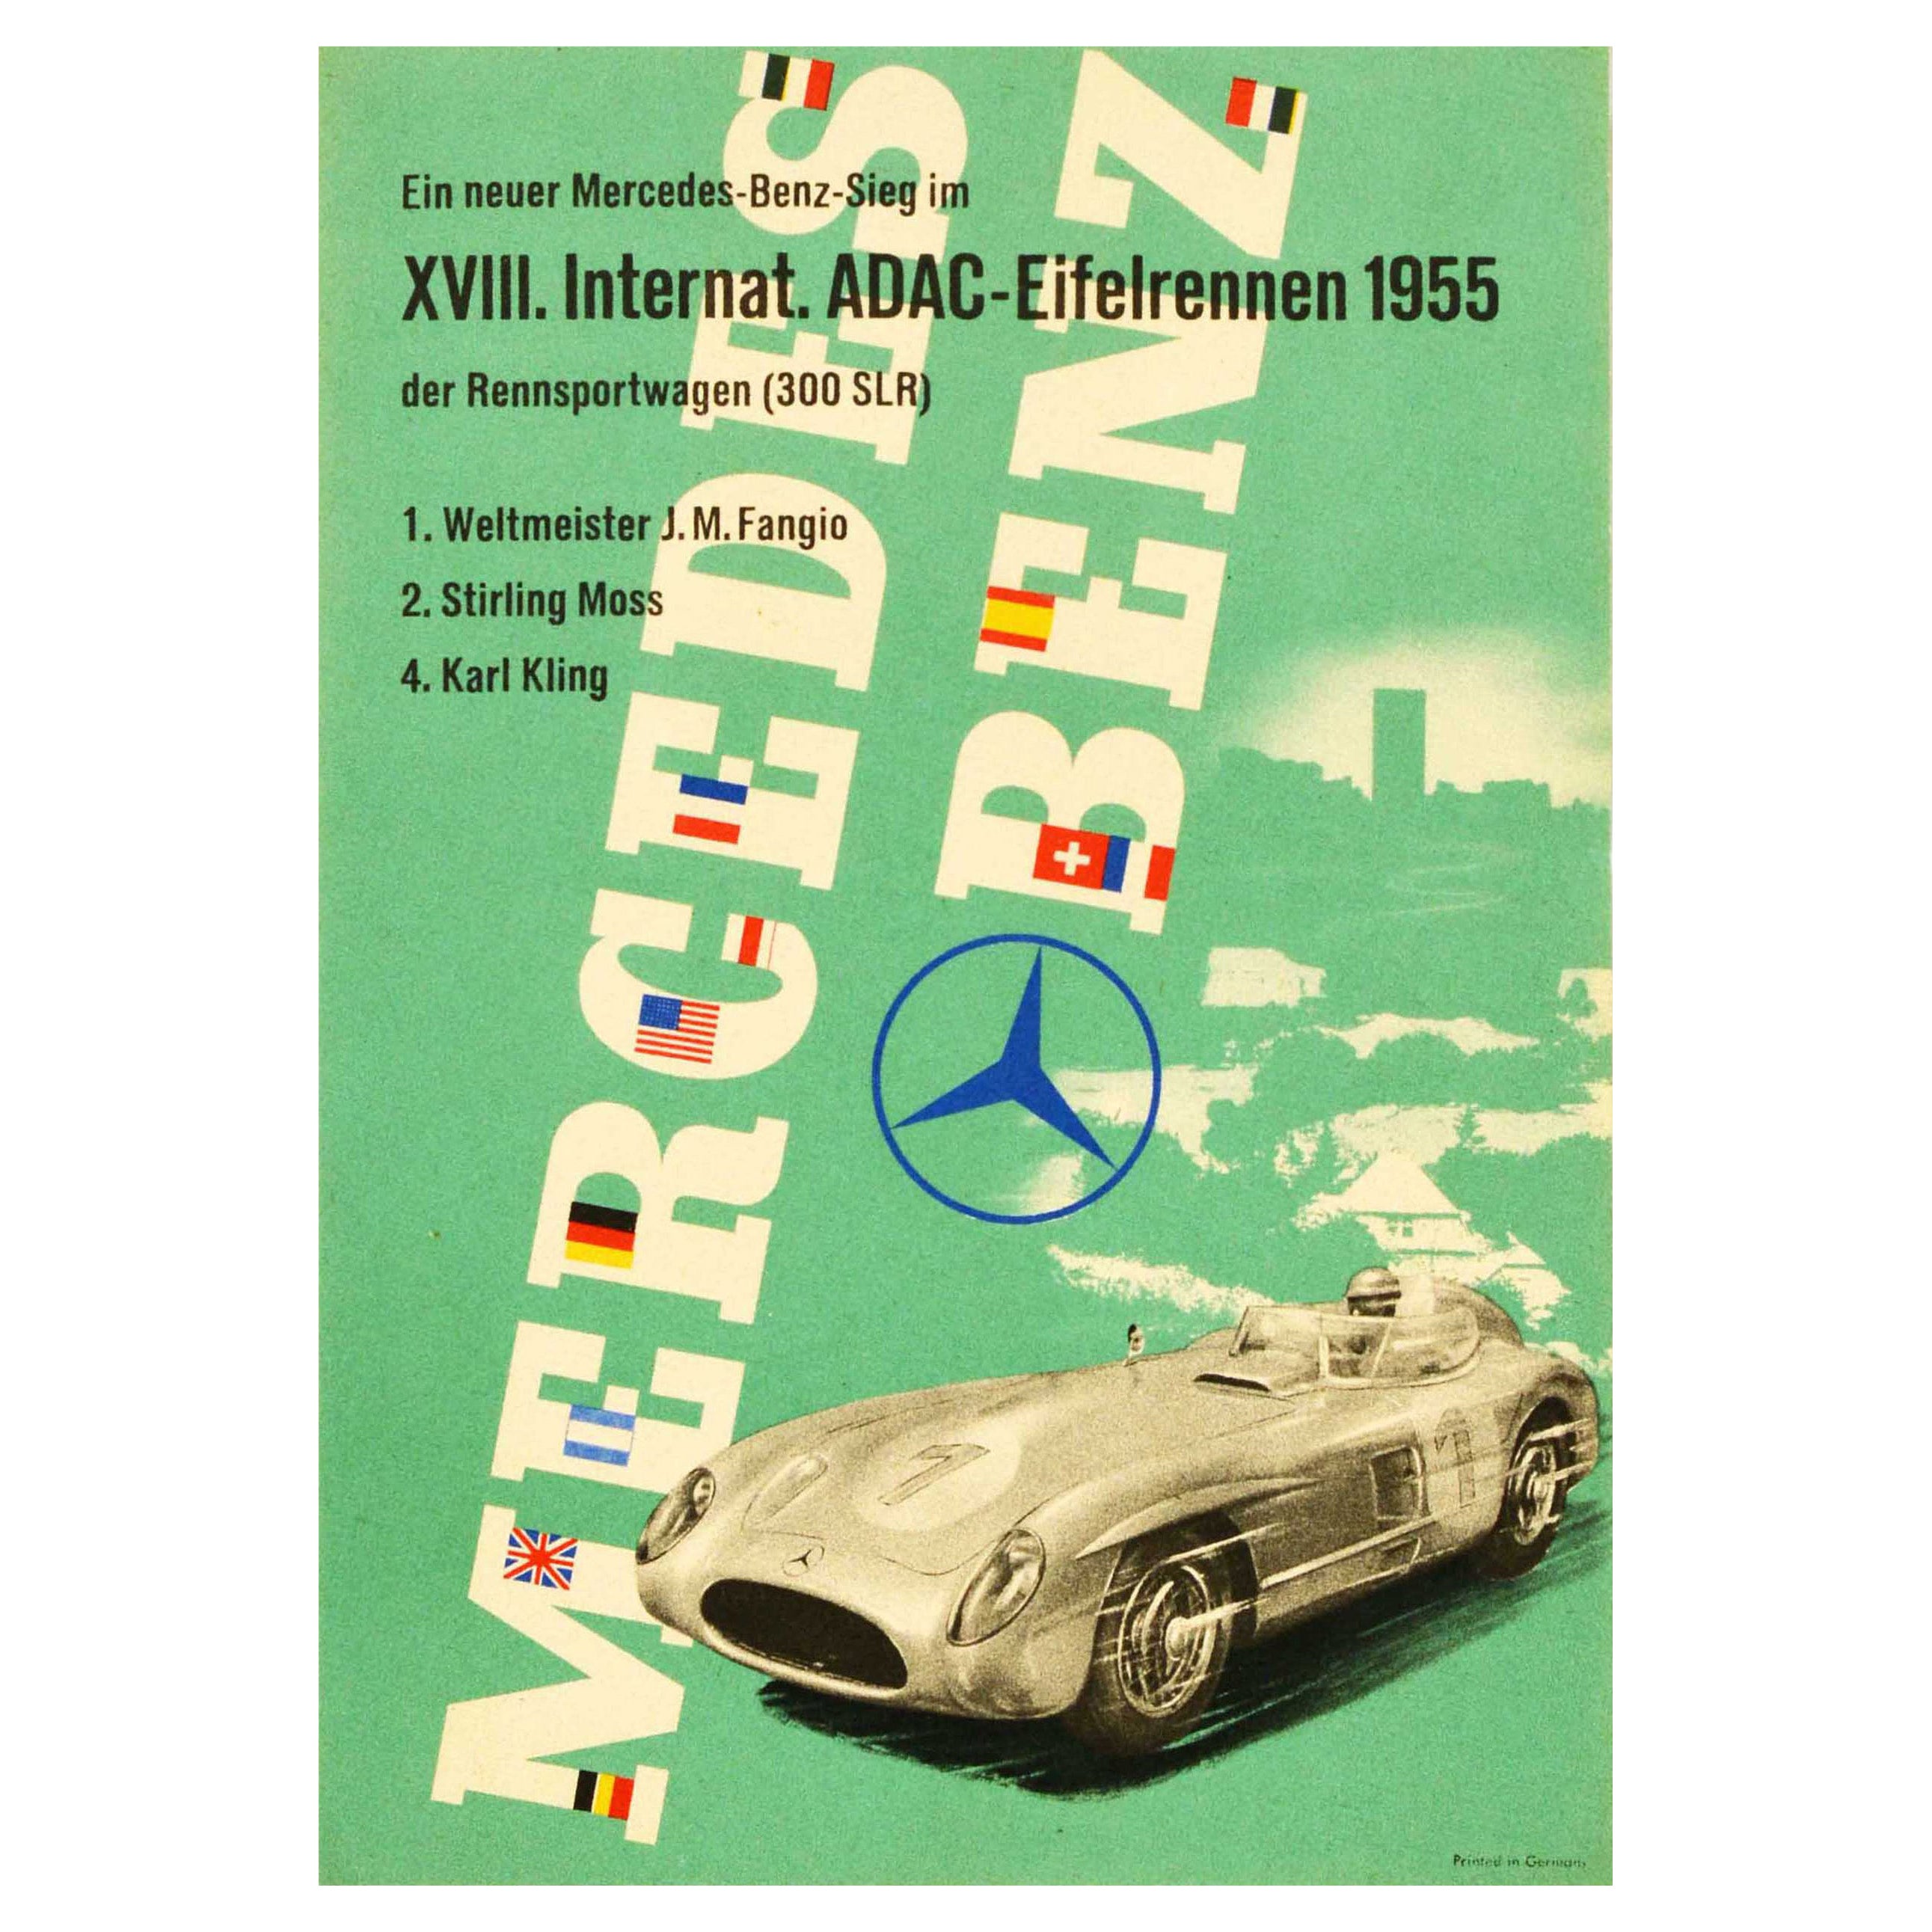 Original Vintage- Motorsport-Poster Mercedes Benz Victory ADAC 1955 300SLR Fangio im Angebot